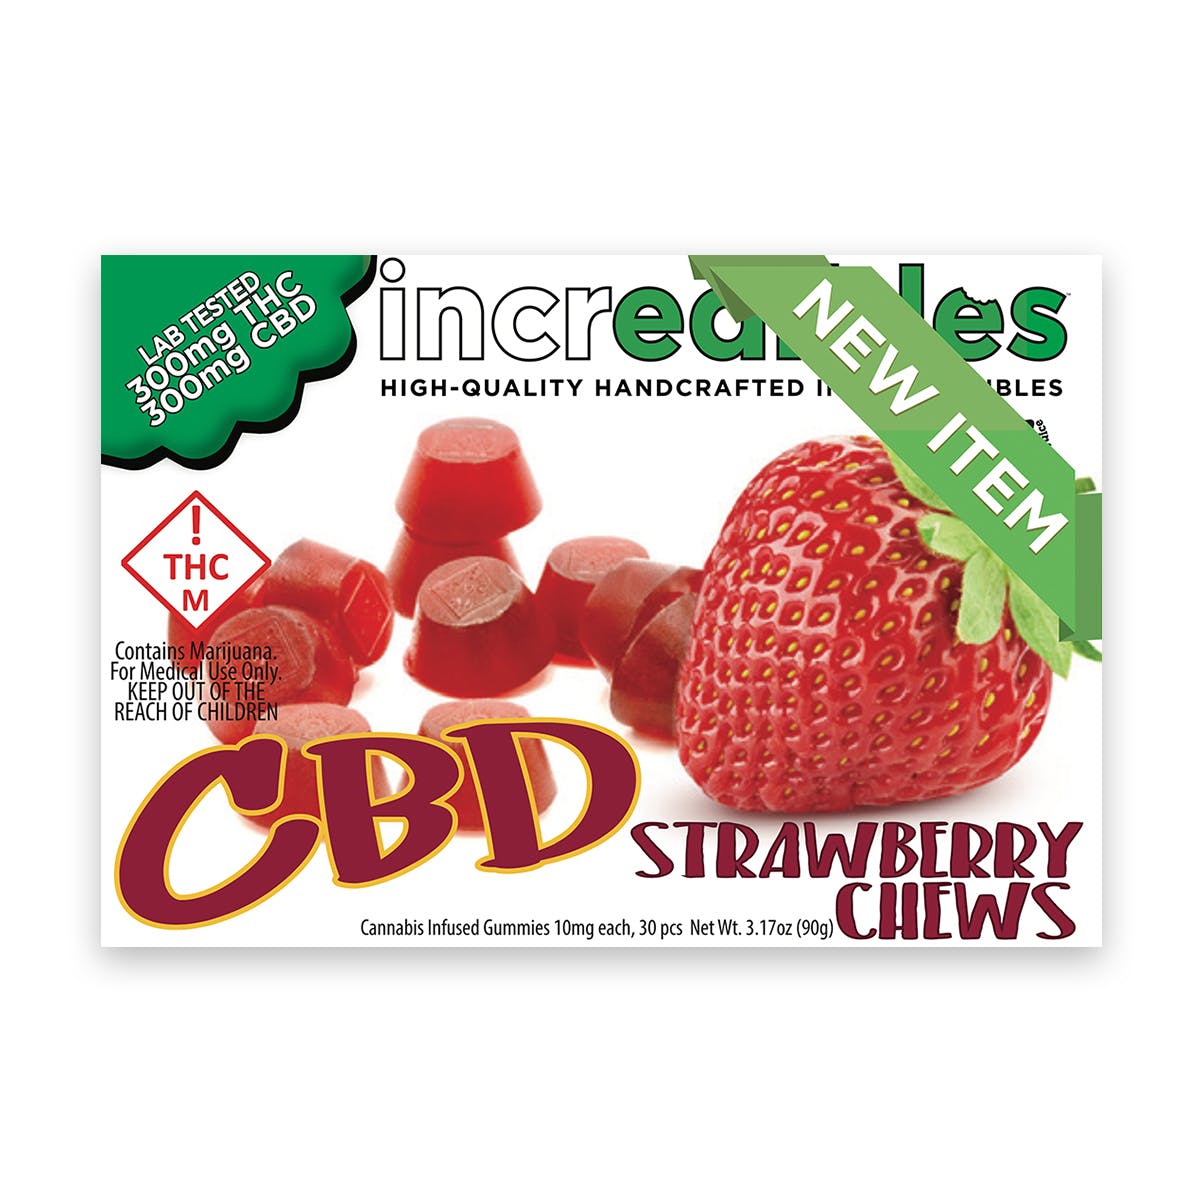 marijuana-dispensaries-allgreens-medical-in-denver-cbd-strawberry-chews-2c-300mg-11-thccbd-med